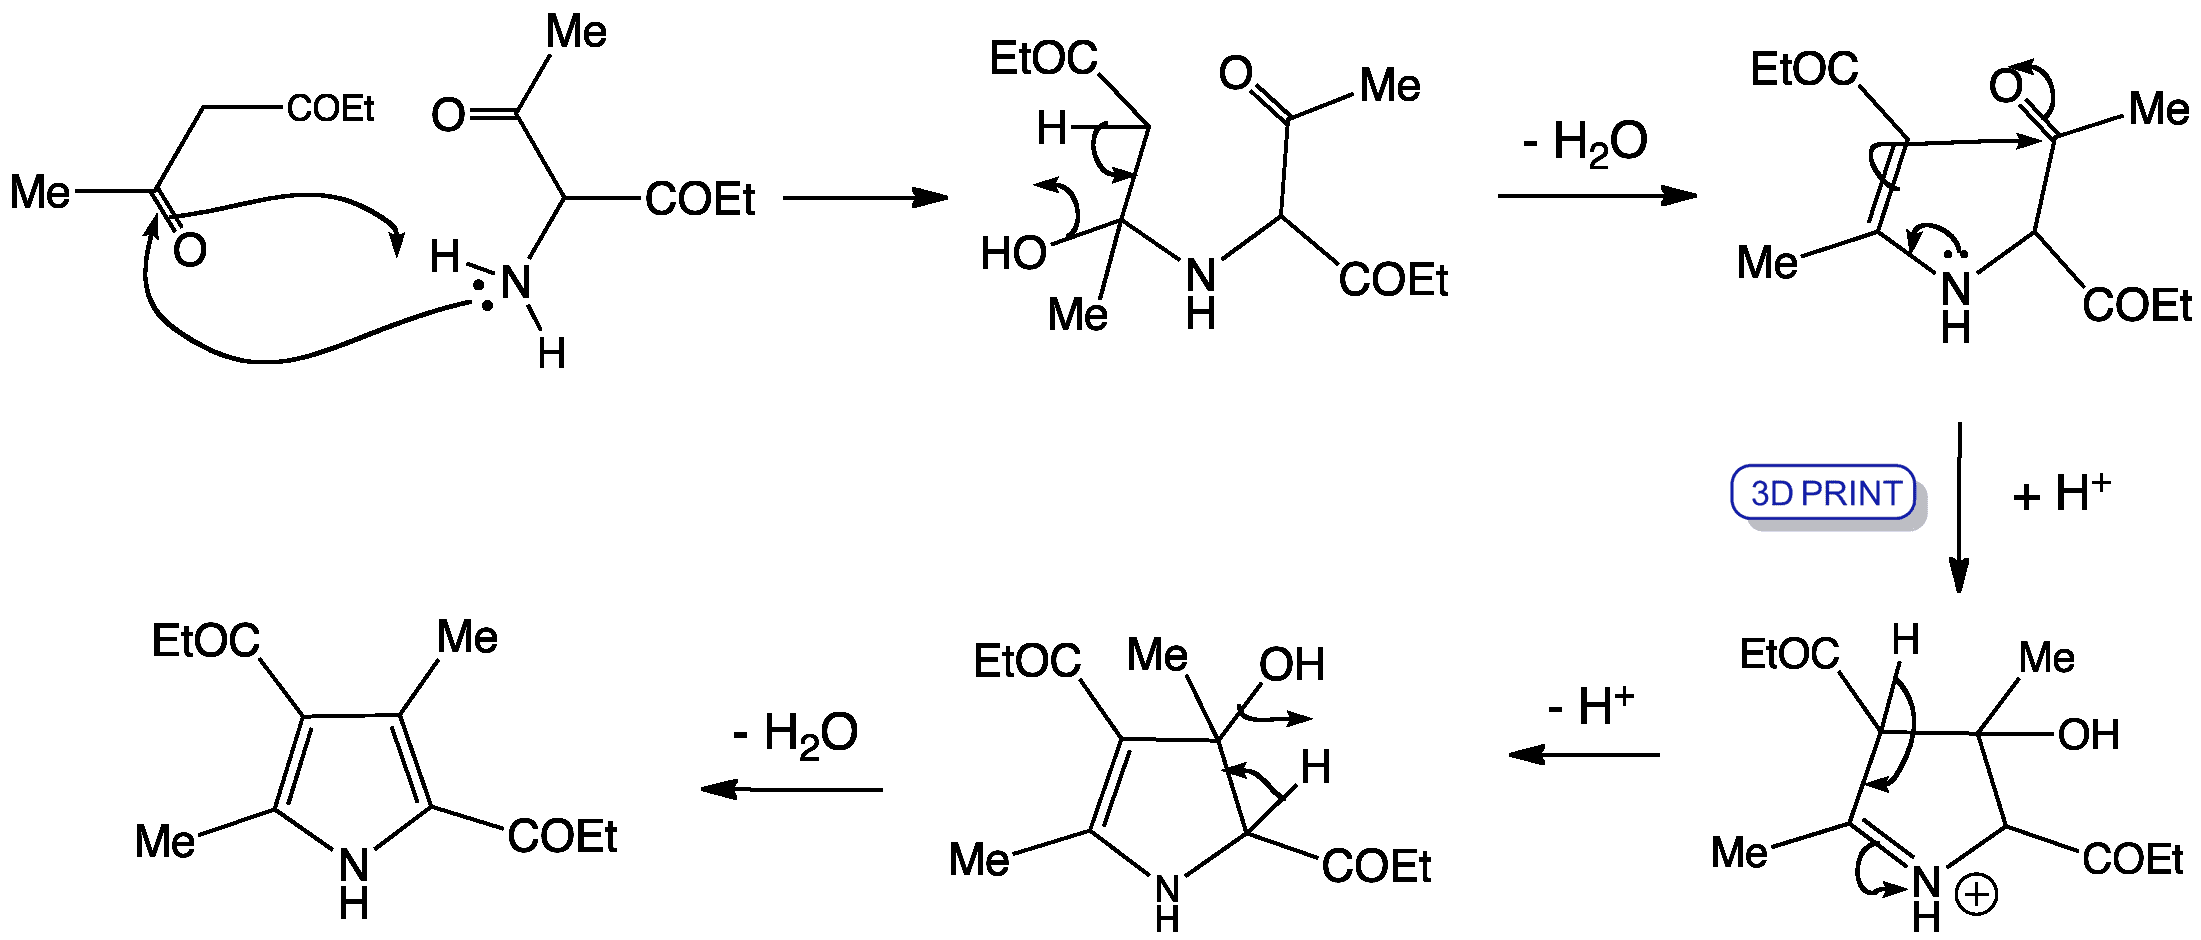 heterocyclic amino acids examples